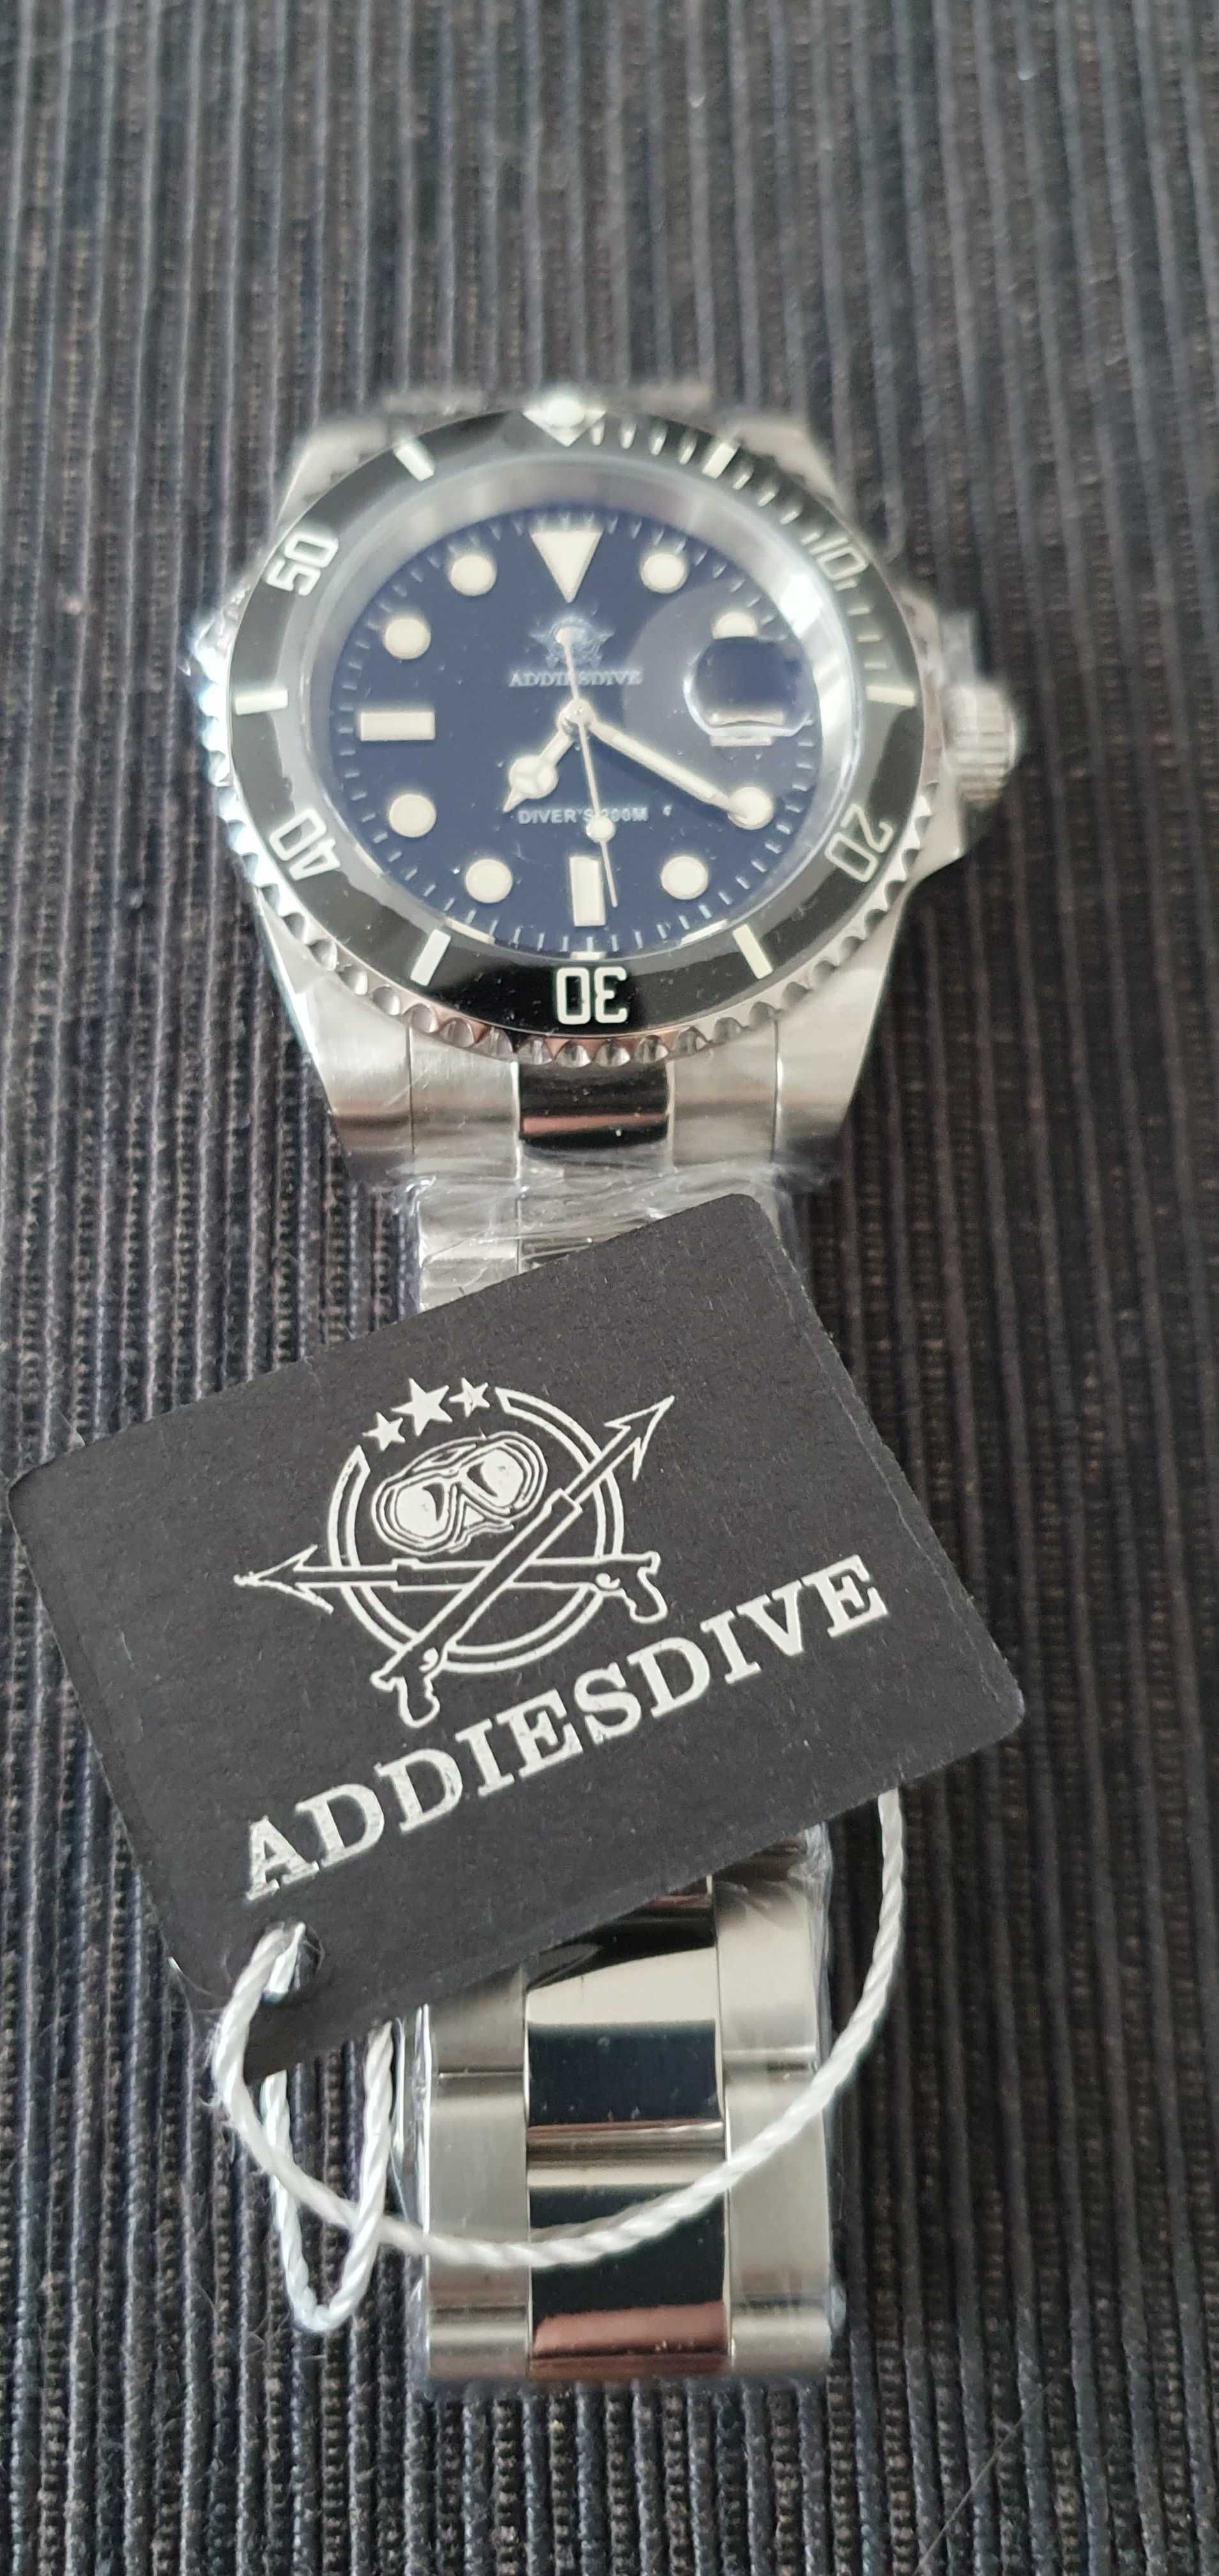 Zegarek Addiesdive diver nowy + pasek gumowy - okazja !!